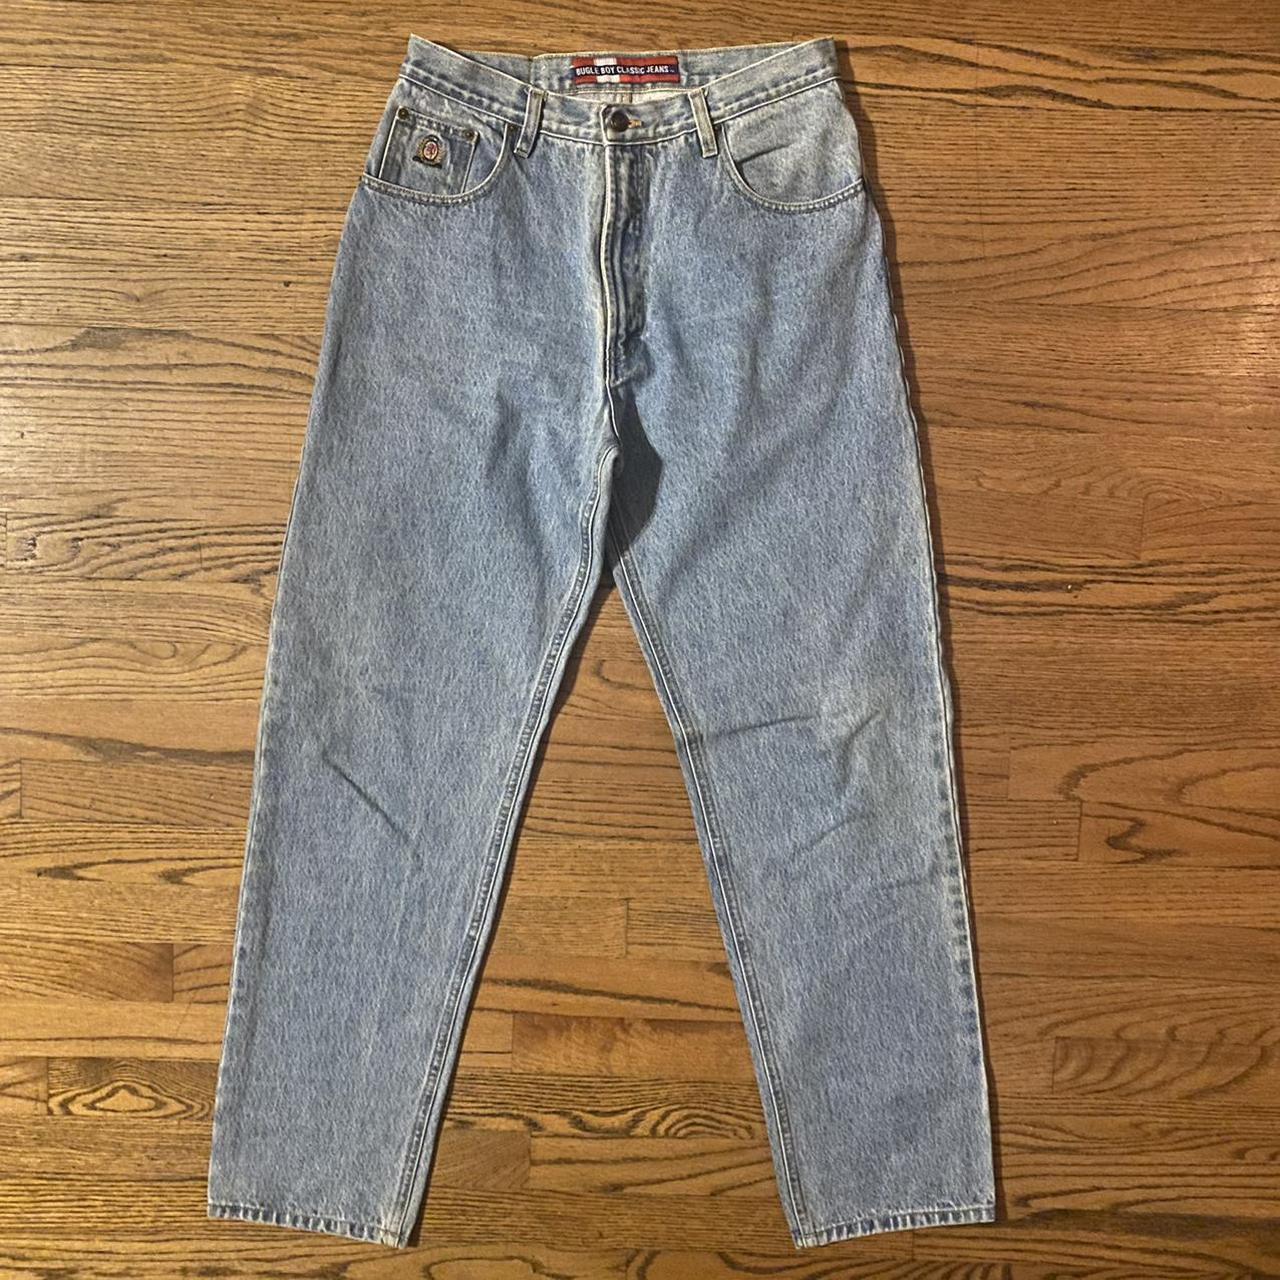 Product Image 1 - Vintage Bugle Boy classic jeans.